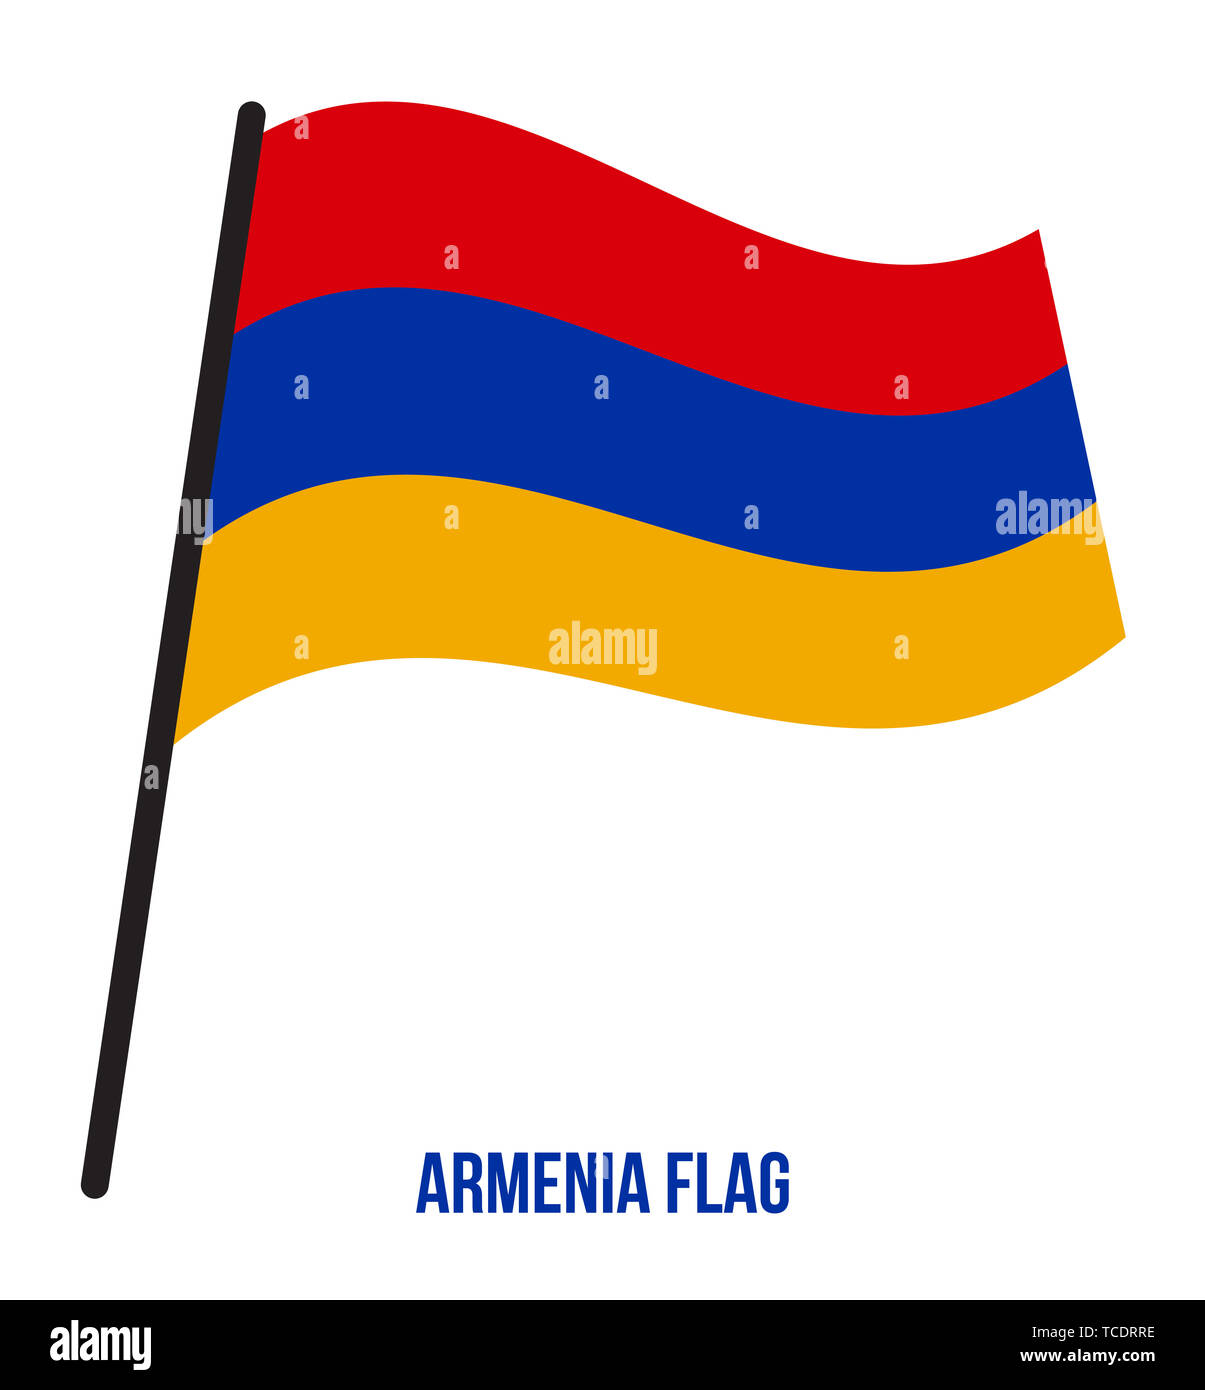 Armenia Flag Waving Vector Illustration on White Background. Armenia National Flag. Stock Photo